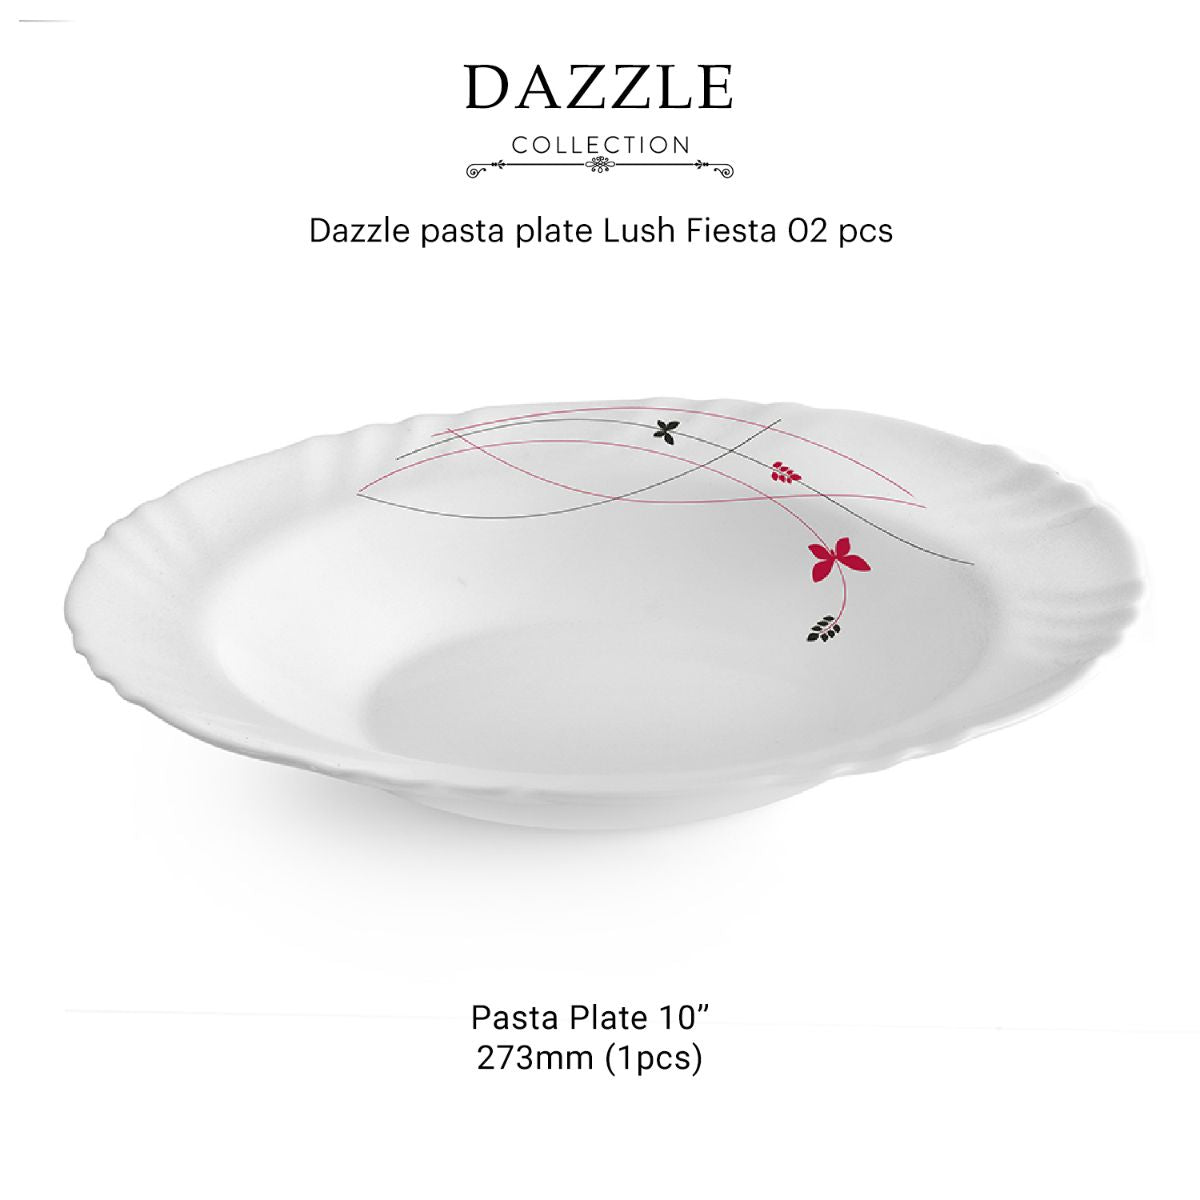 Dazzle Series Pasta Gift Set, 2 Pieces Lush Fiesta / 2 Pieces